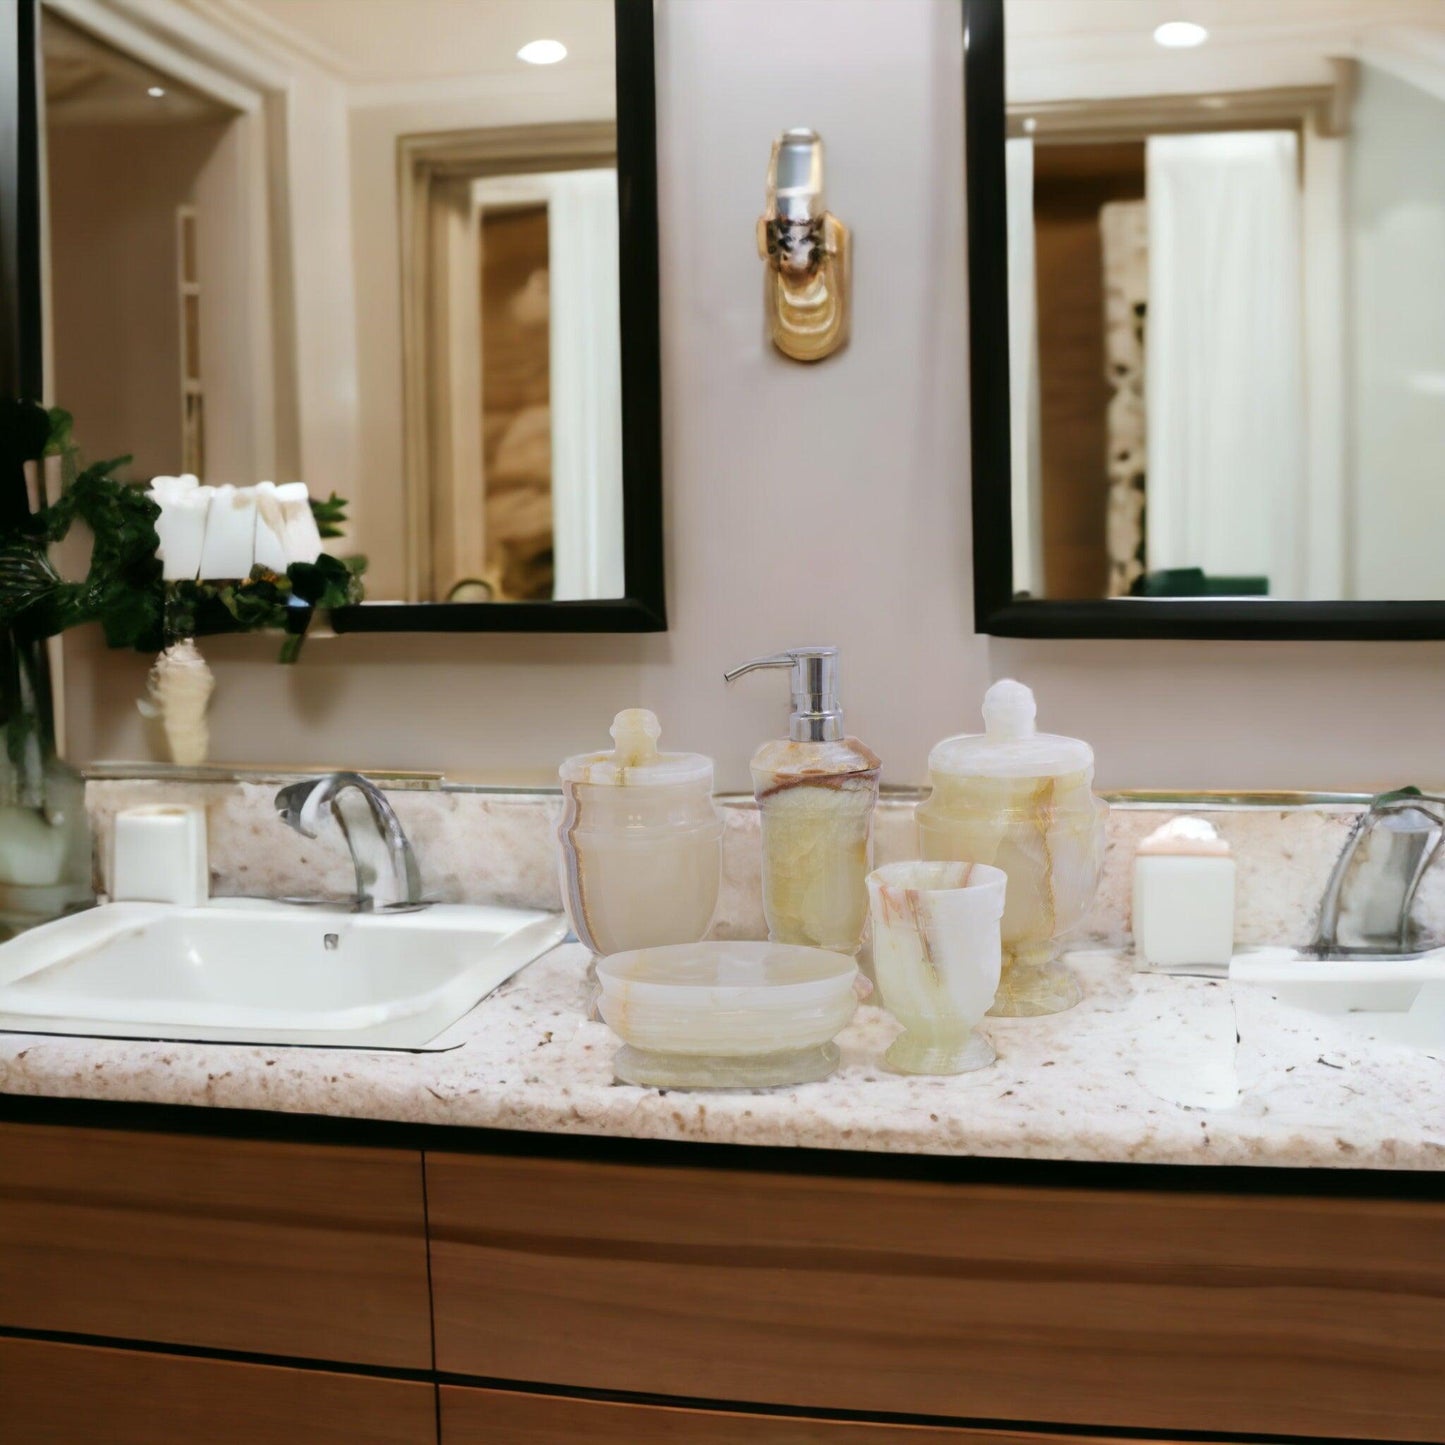 5-Piece bathroom Accessories Set of White Onyx - Nature Home Decor